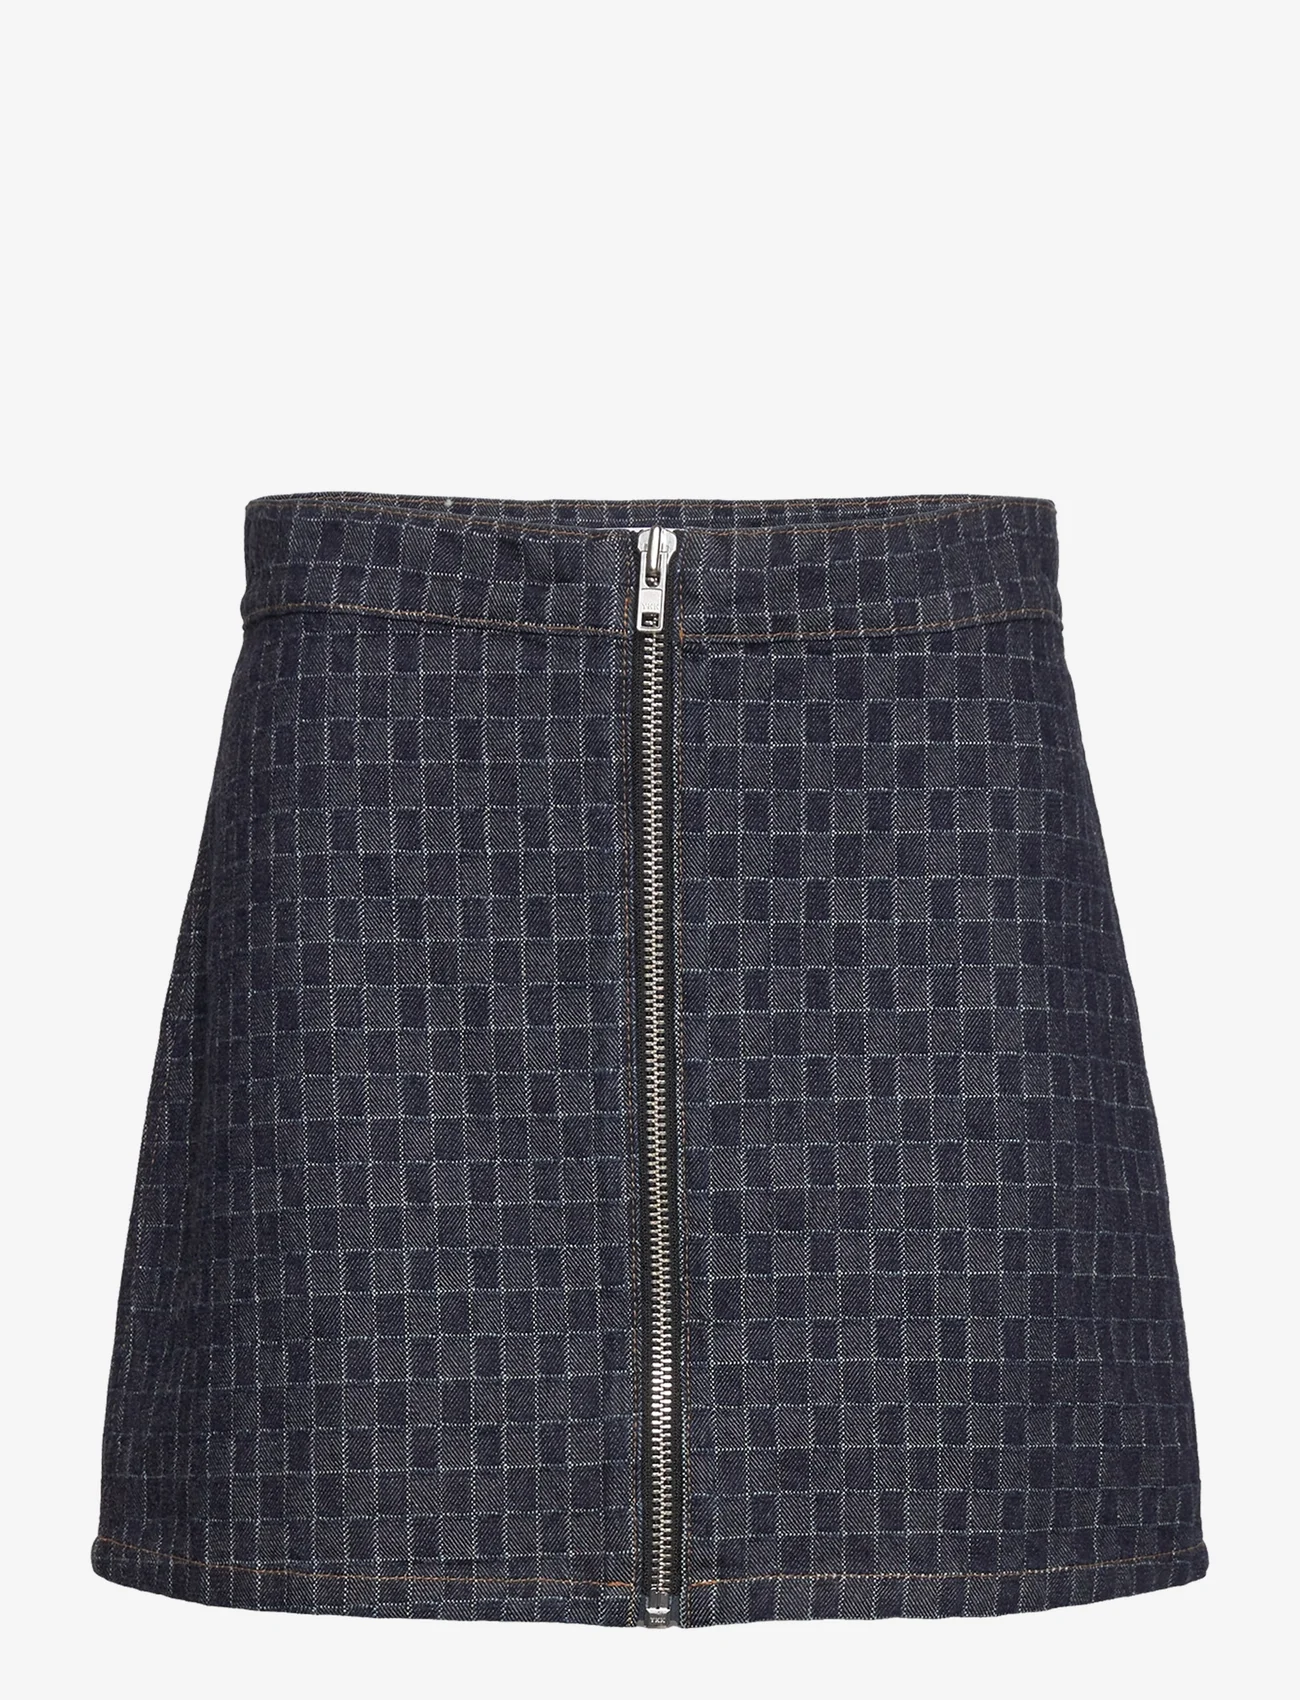 Hope - Brick Skirt Textured Indigo - short skirts - textured indigo - 0